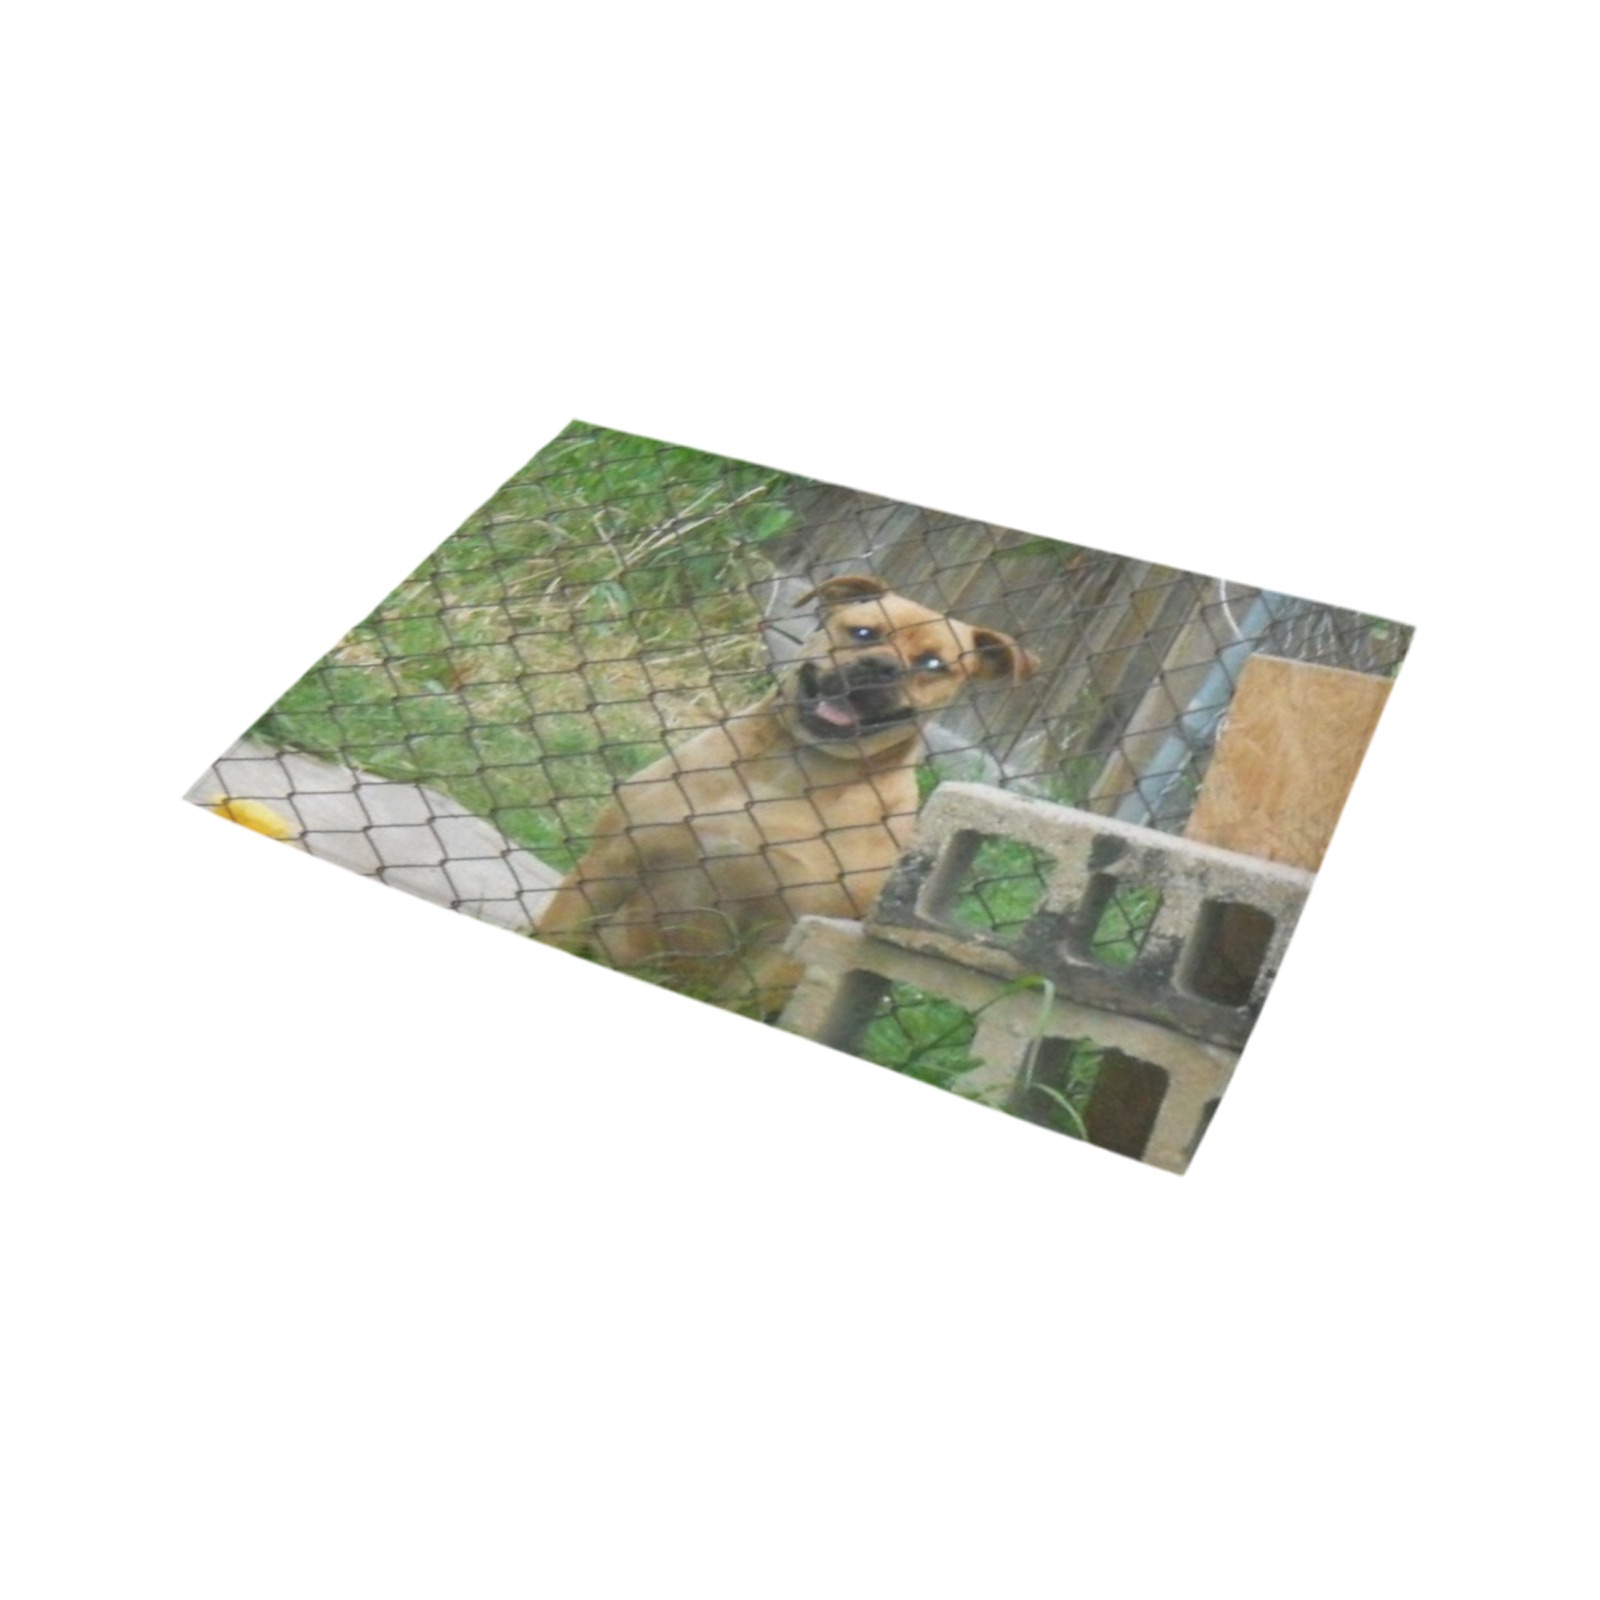 A Smiling Dog Azalea Doormat 24" x 16" (Sponge Material)